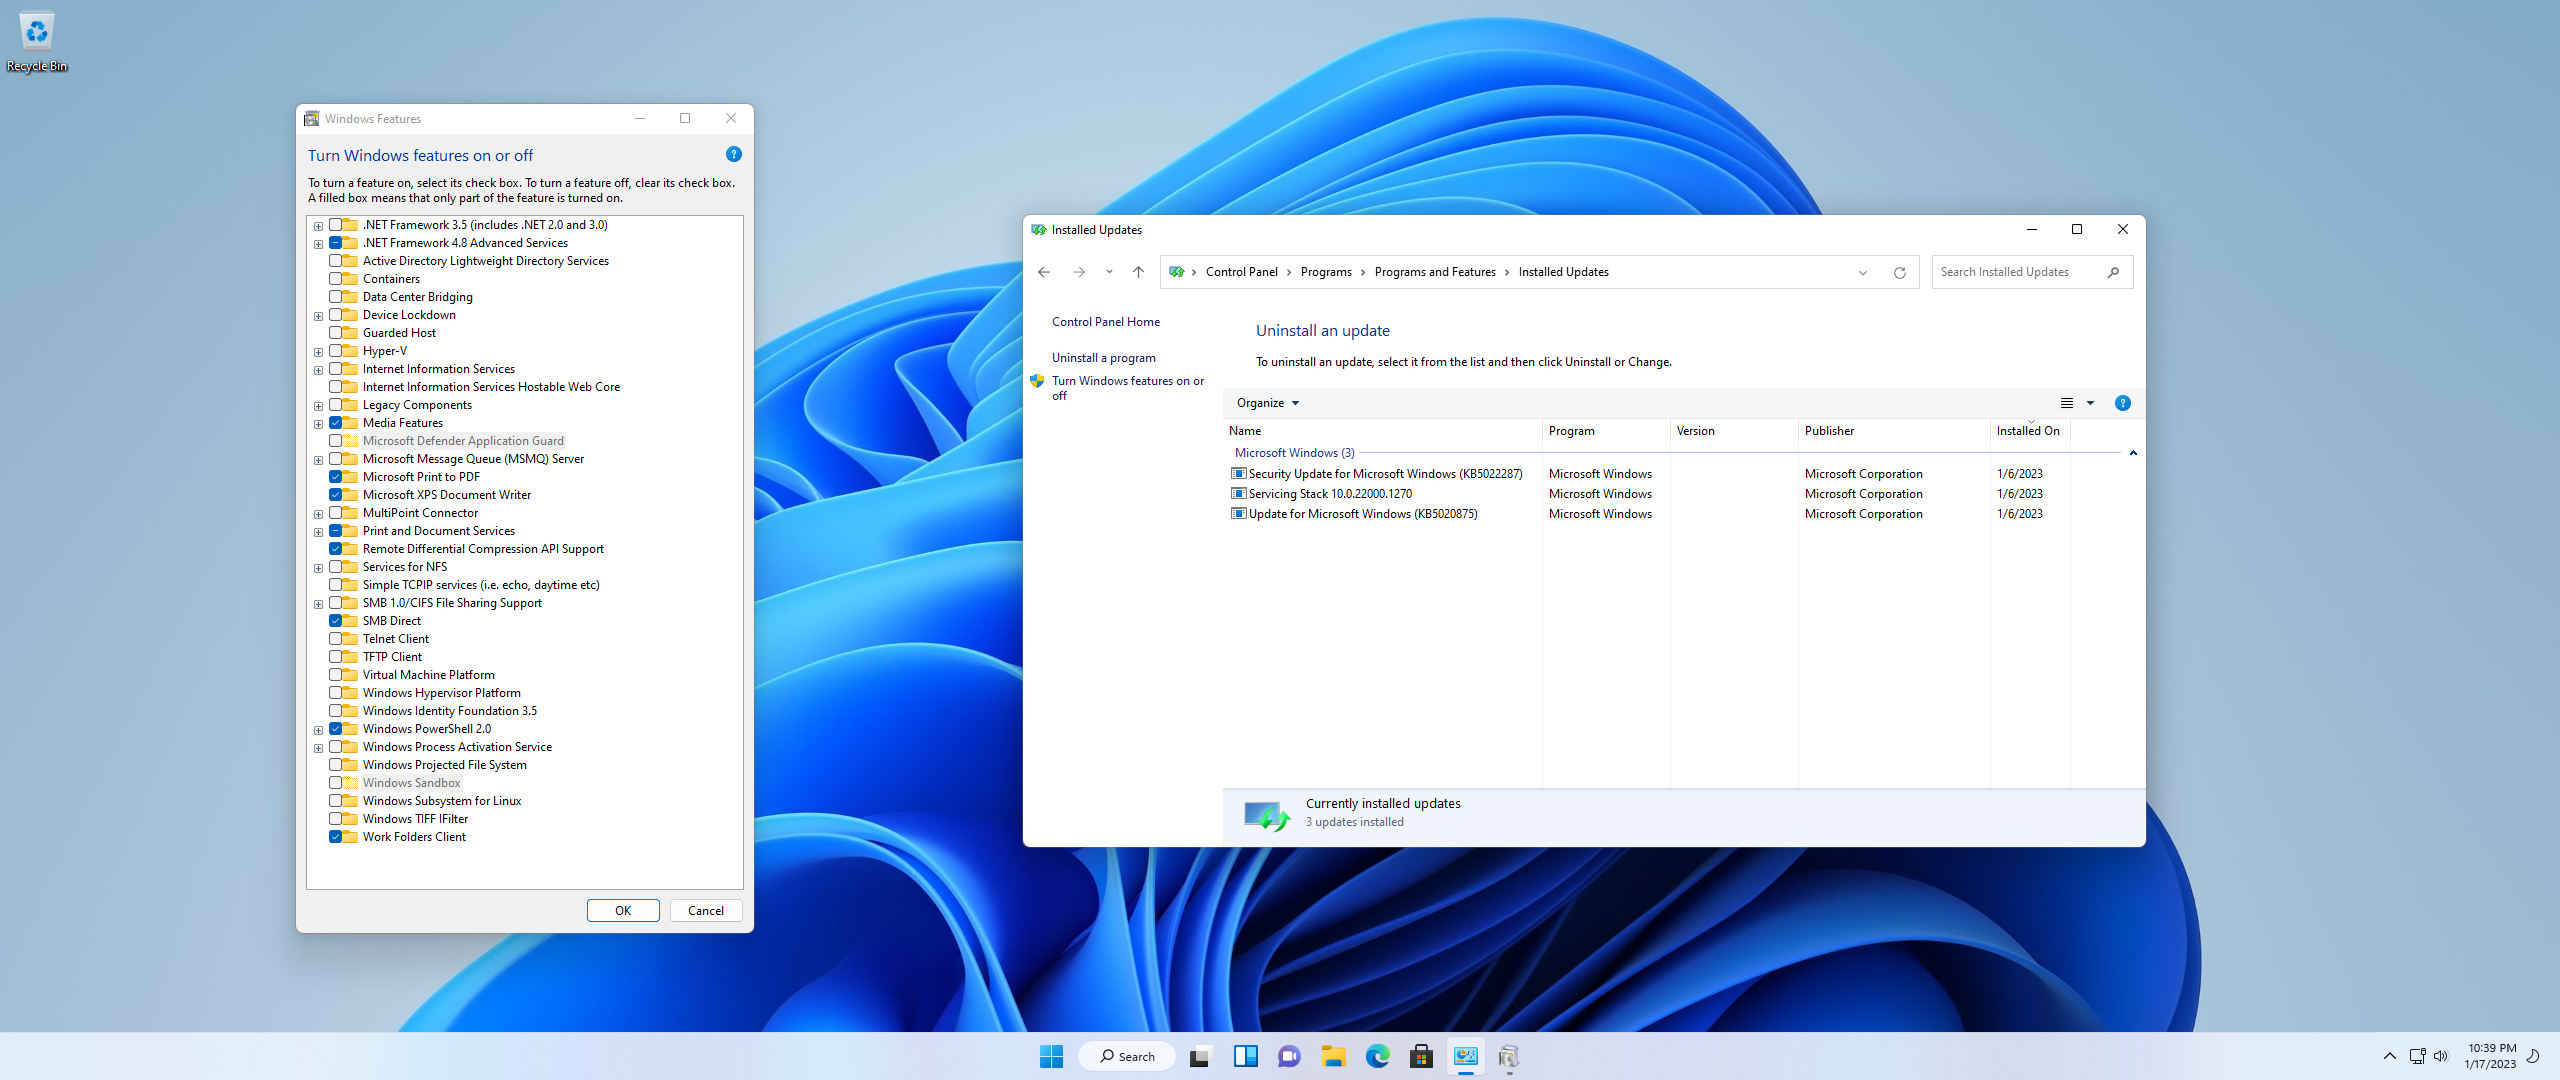 Microsoft Windows 11 [10.0.22000.1455], Version 21H2 (Updated January 2023) - Оригинальные образы от Microsoft MSDN [En]